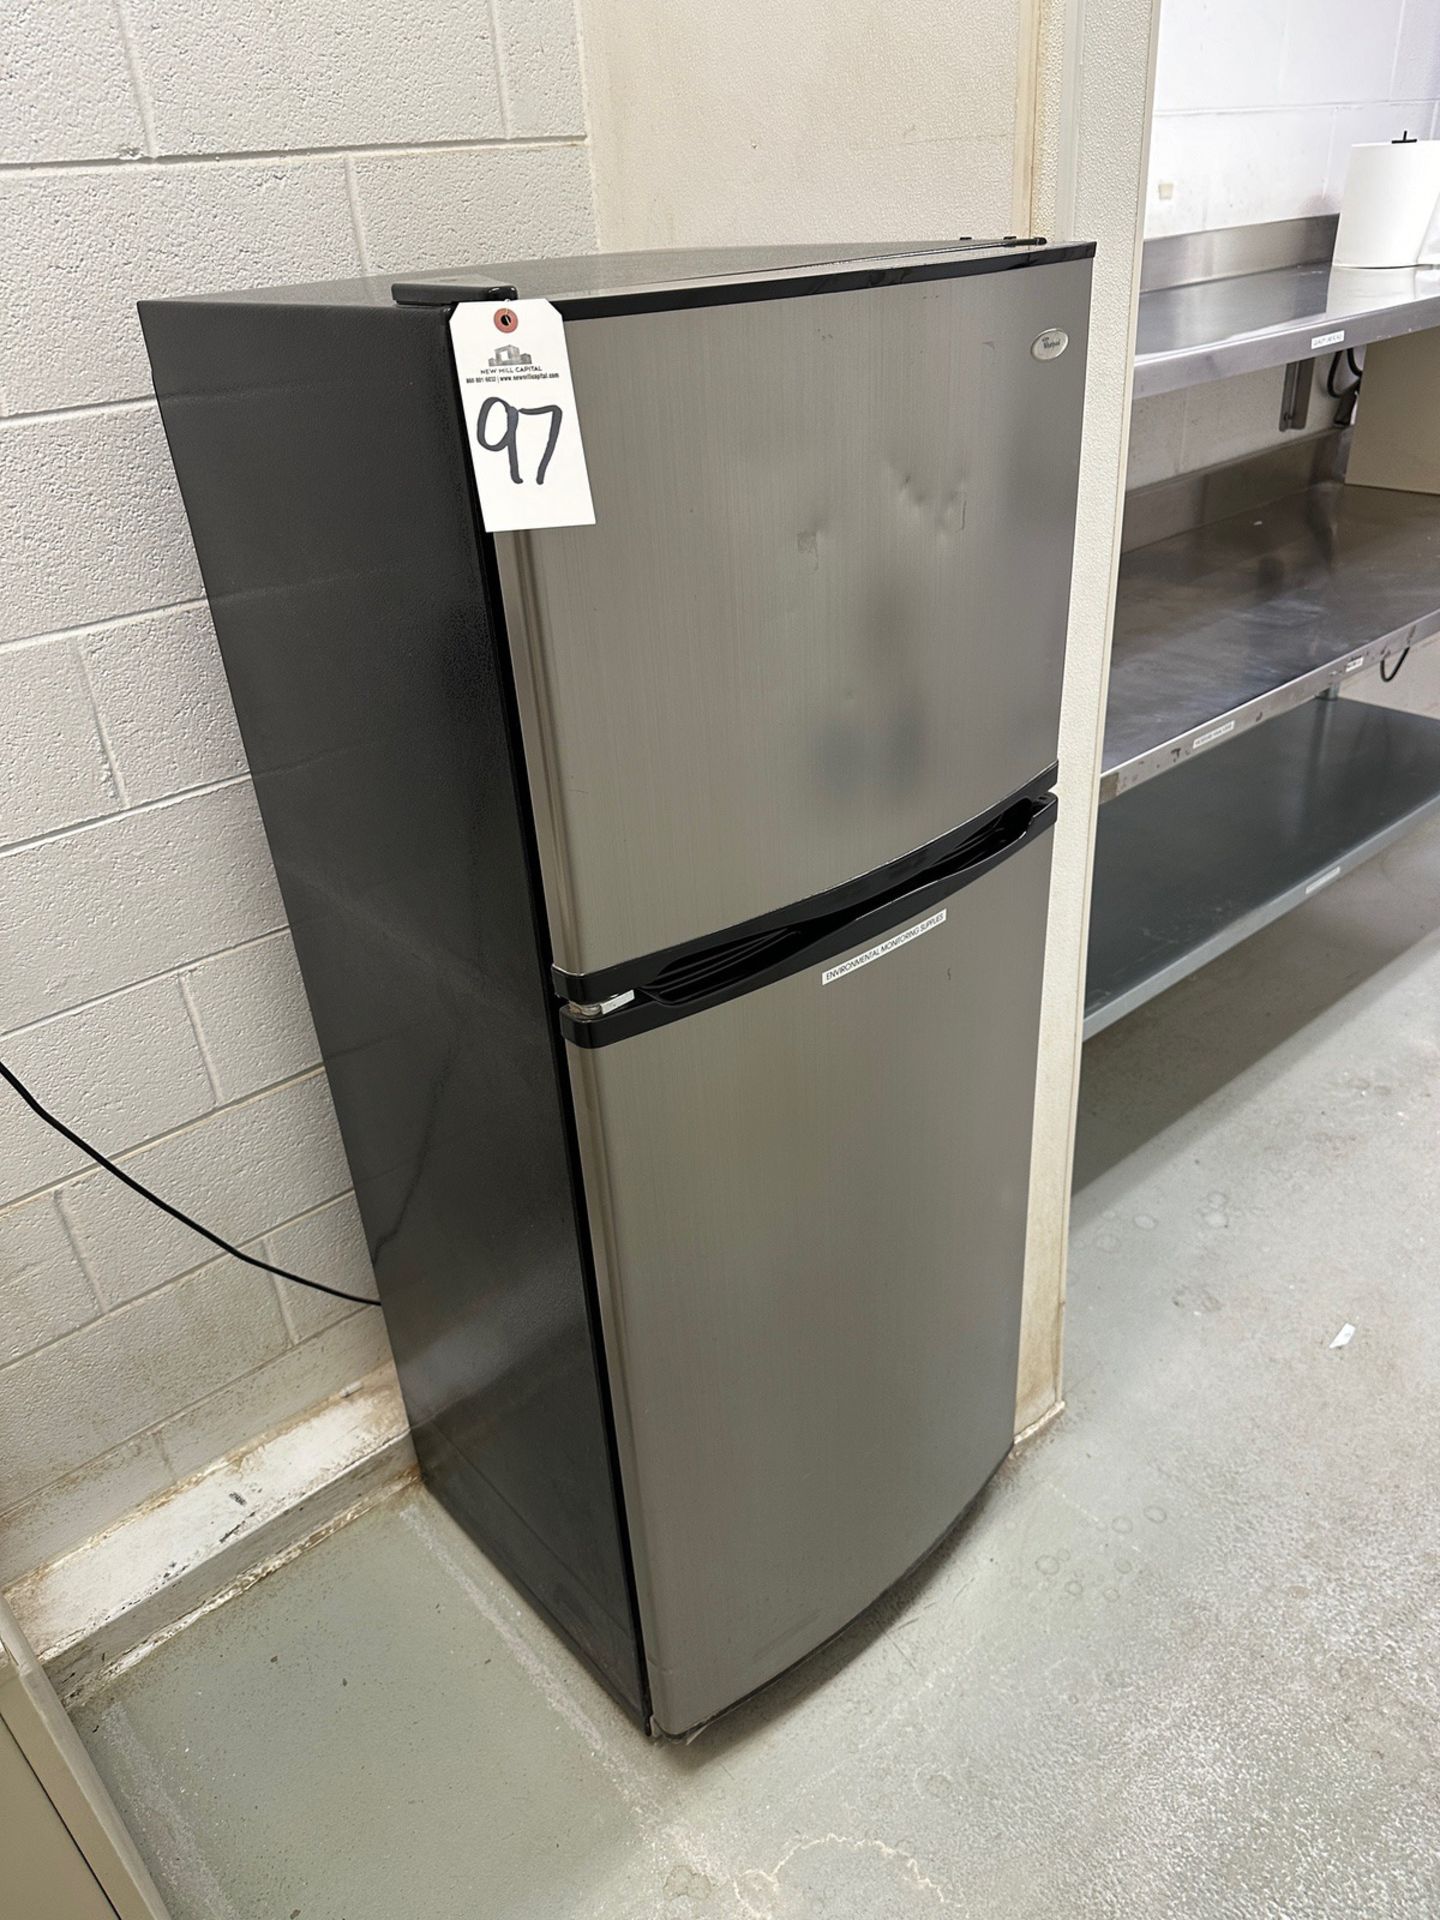 Whirlpool Refrigerator / Freezer | Rig Fee $35